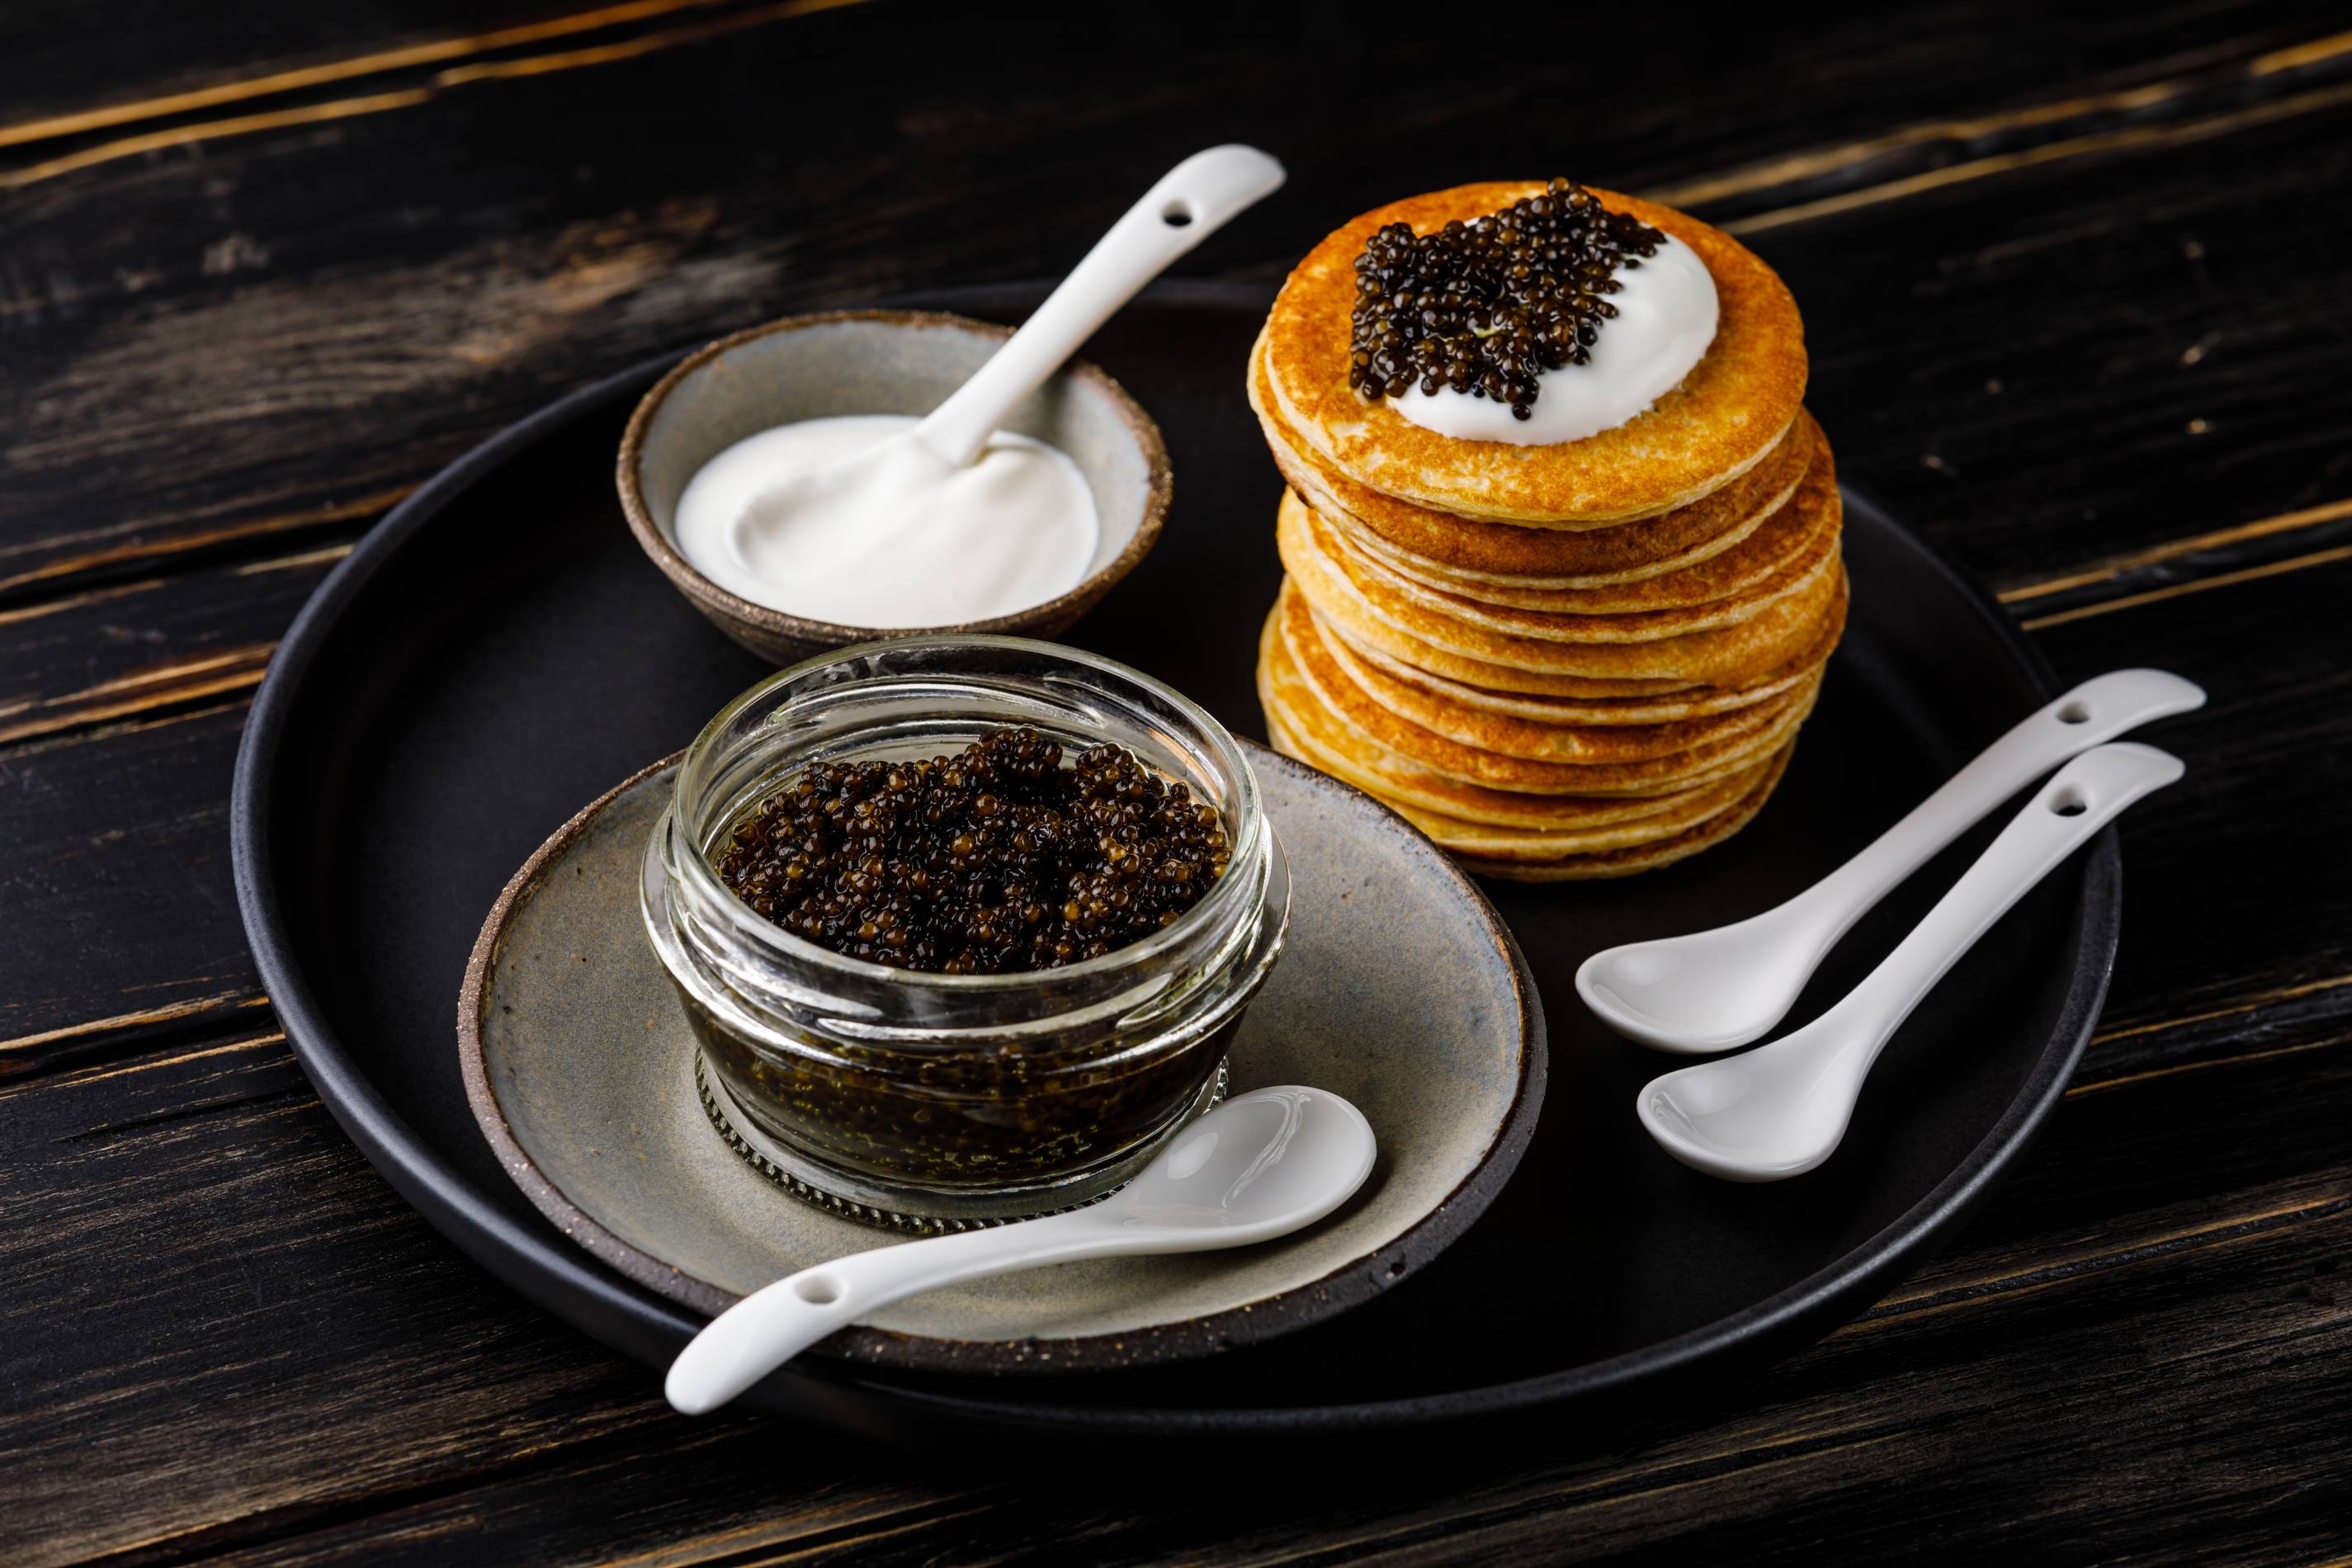 caviar-oc-credit-lisovskaya-getty-images.jpg